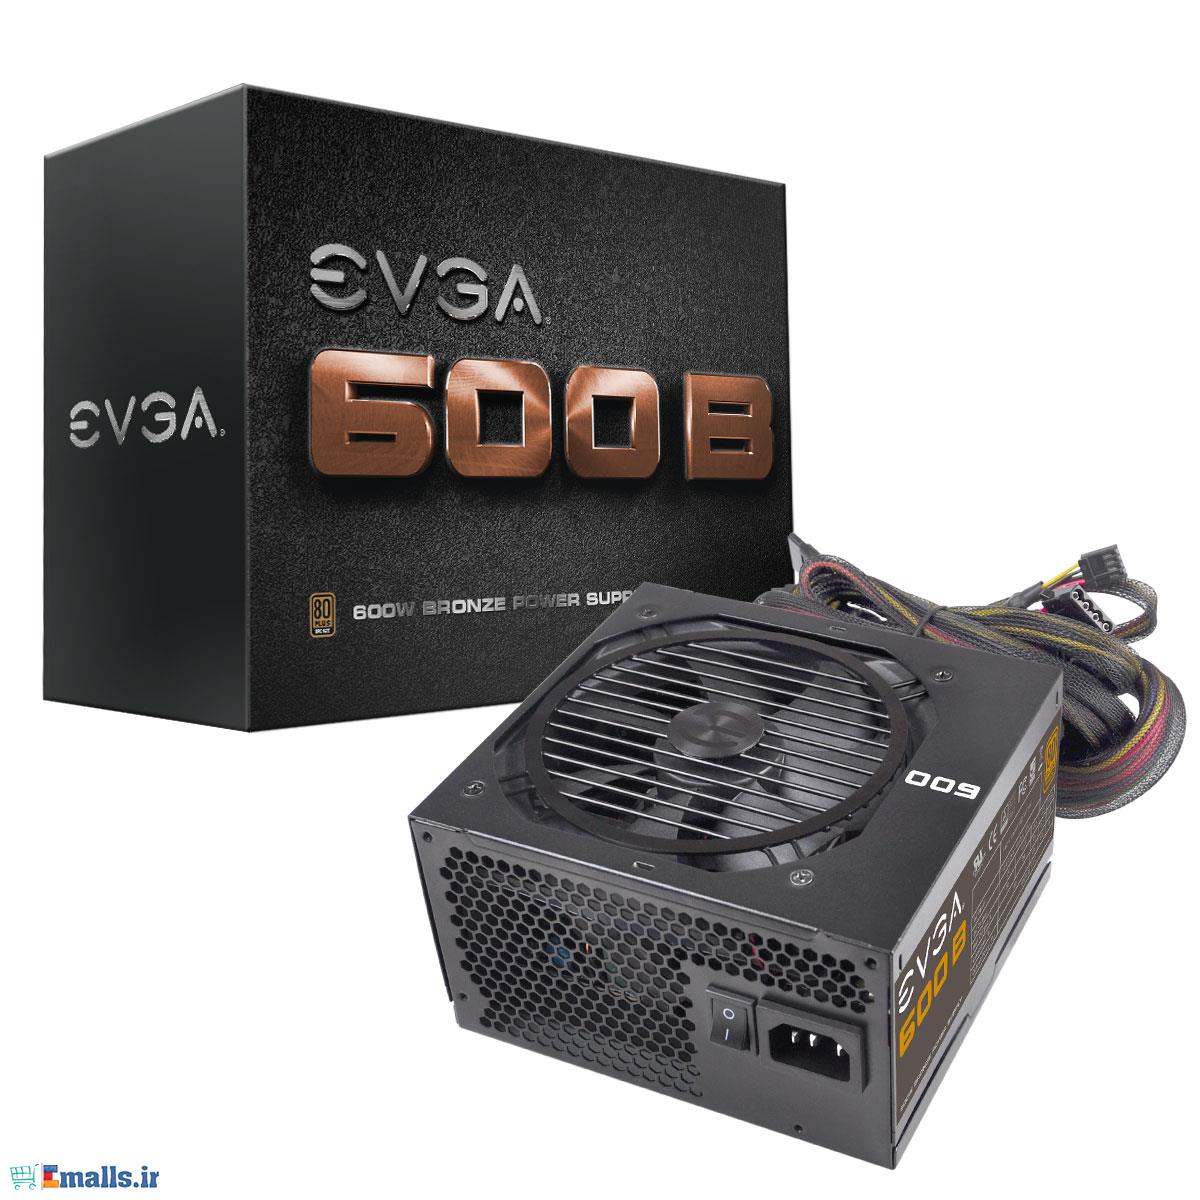 EVGA 600B 80Plus Bronze Power Supply